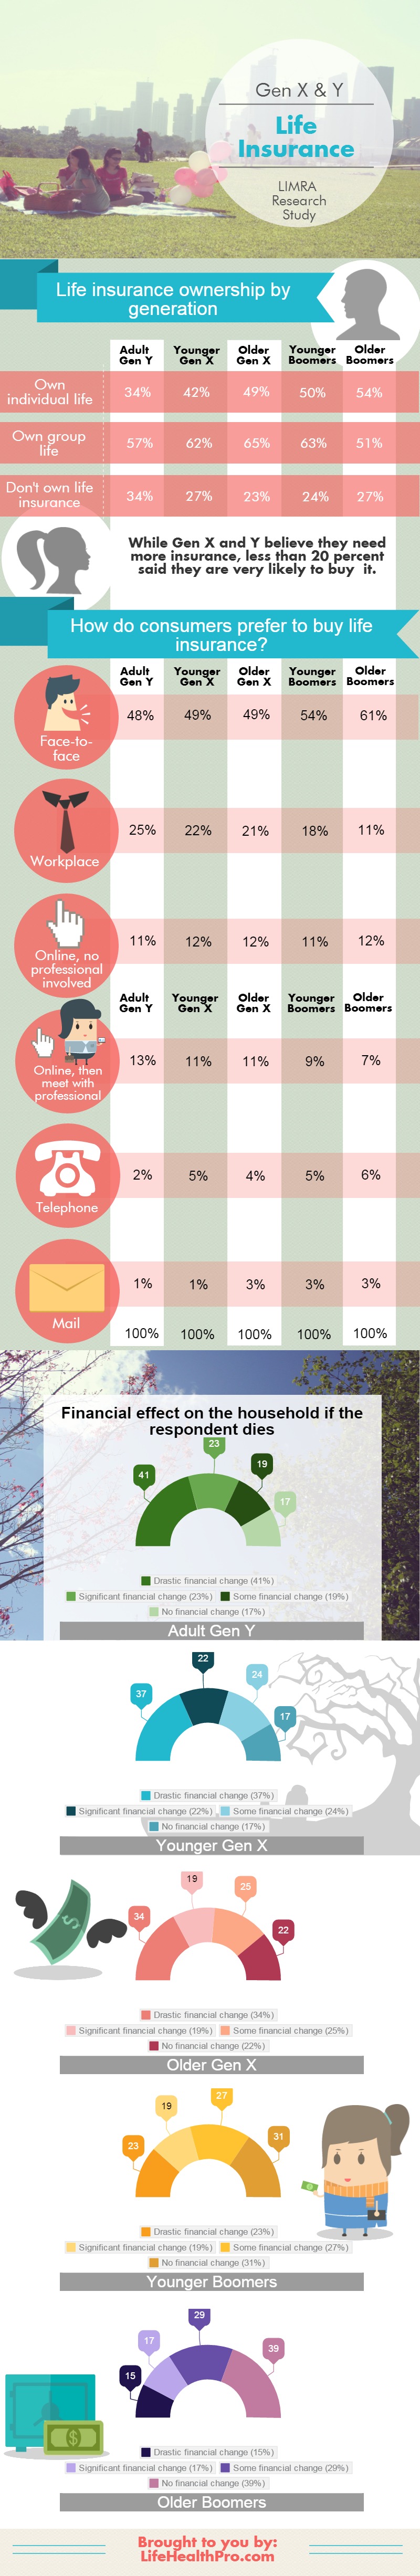 limra-millennials-life-insurance-infographic